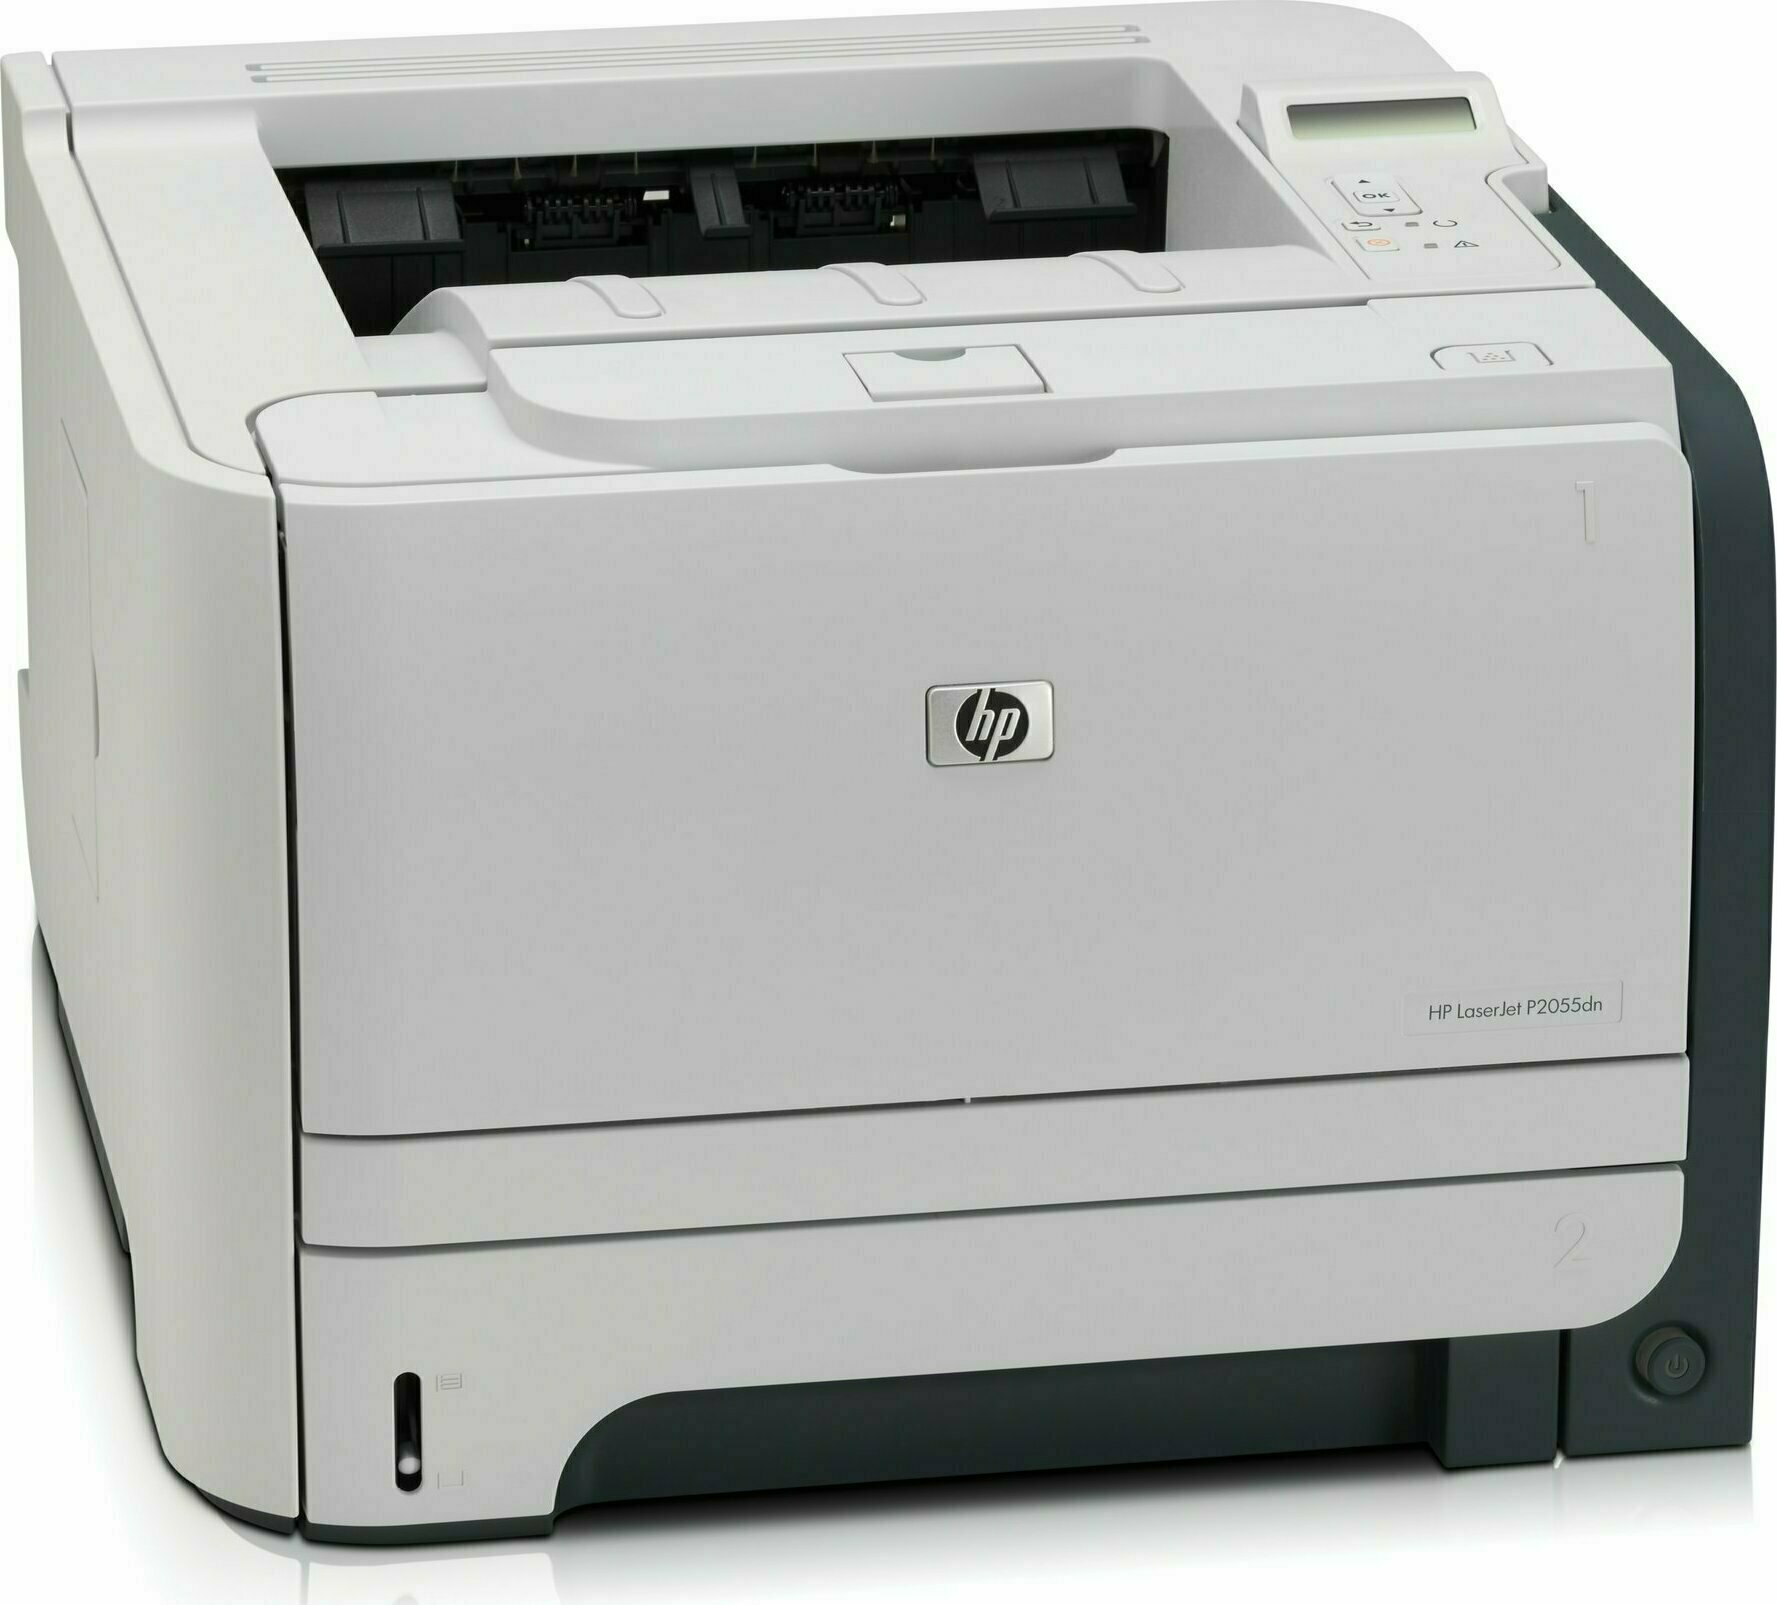 Hewlett Packard Hp Laserjet P2055dn Printer Driver Download